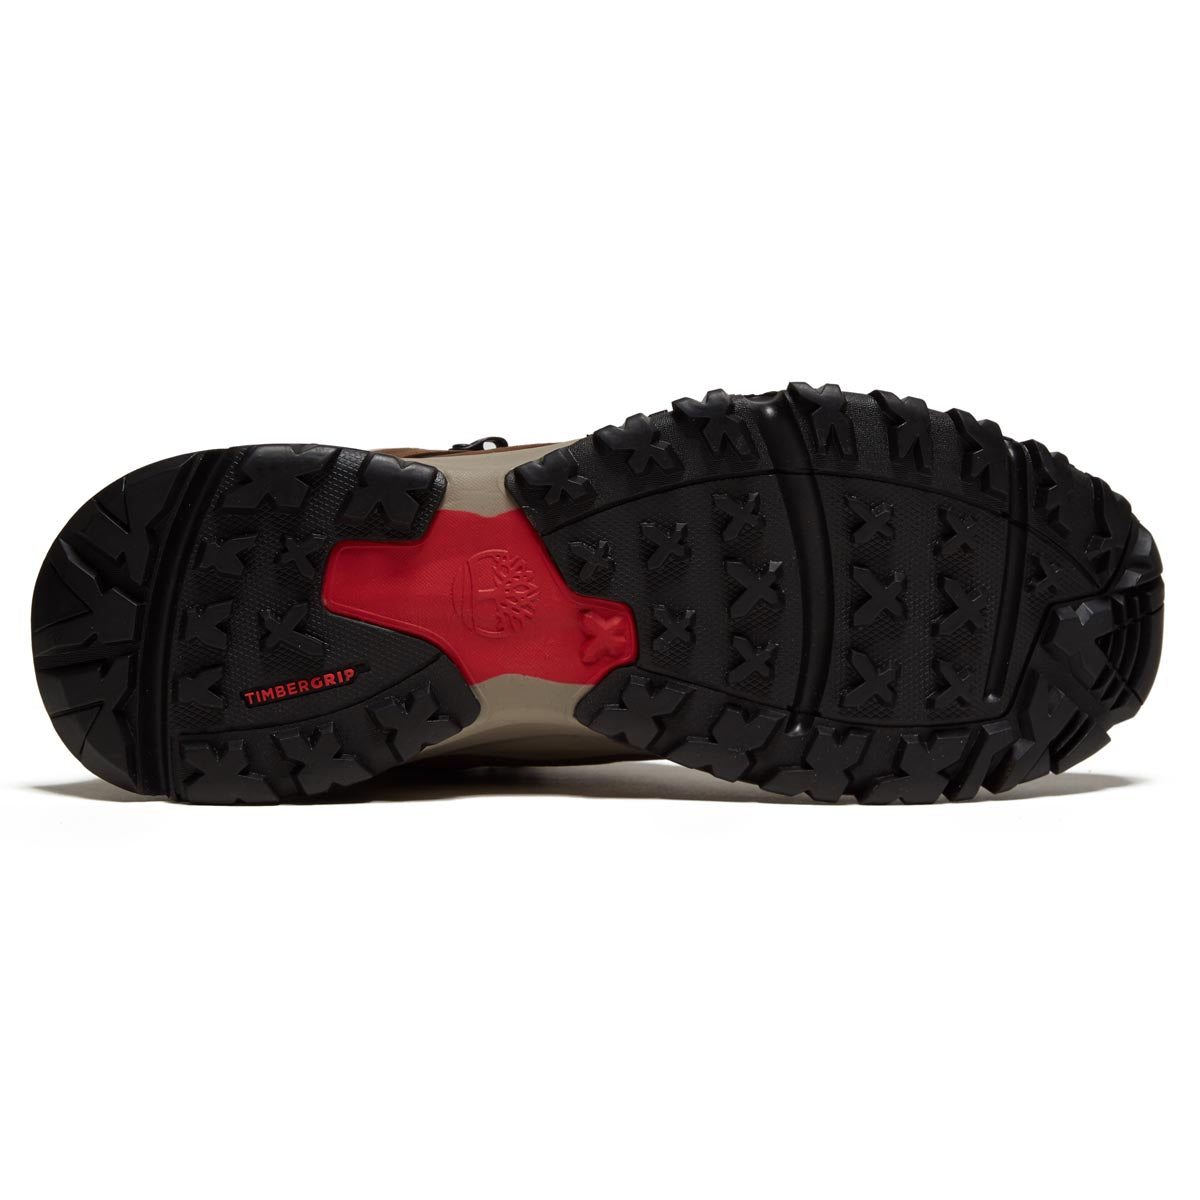 Timberland Motion Scramble Mid Lace Up Wp Shoes - Dark Brown Nubuck image 4